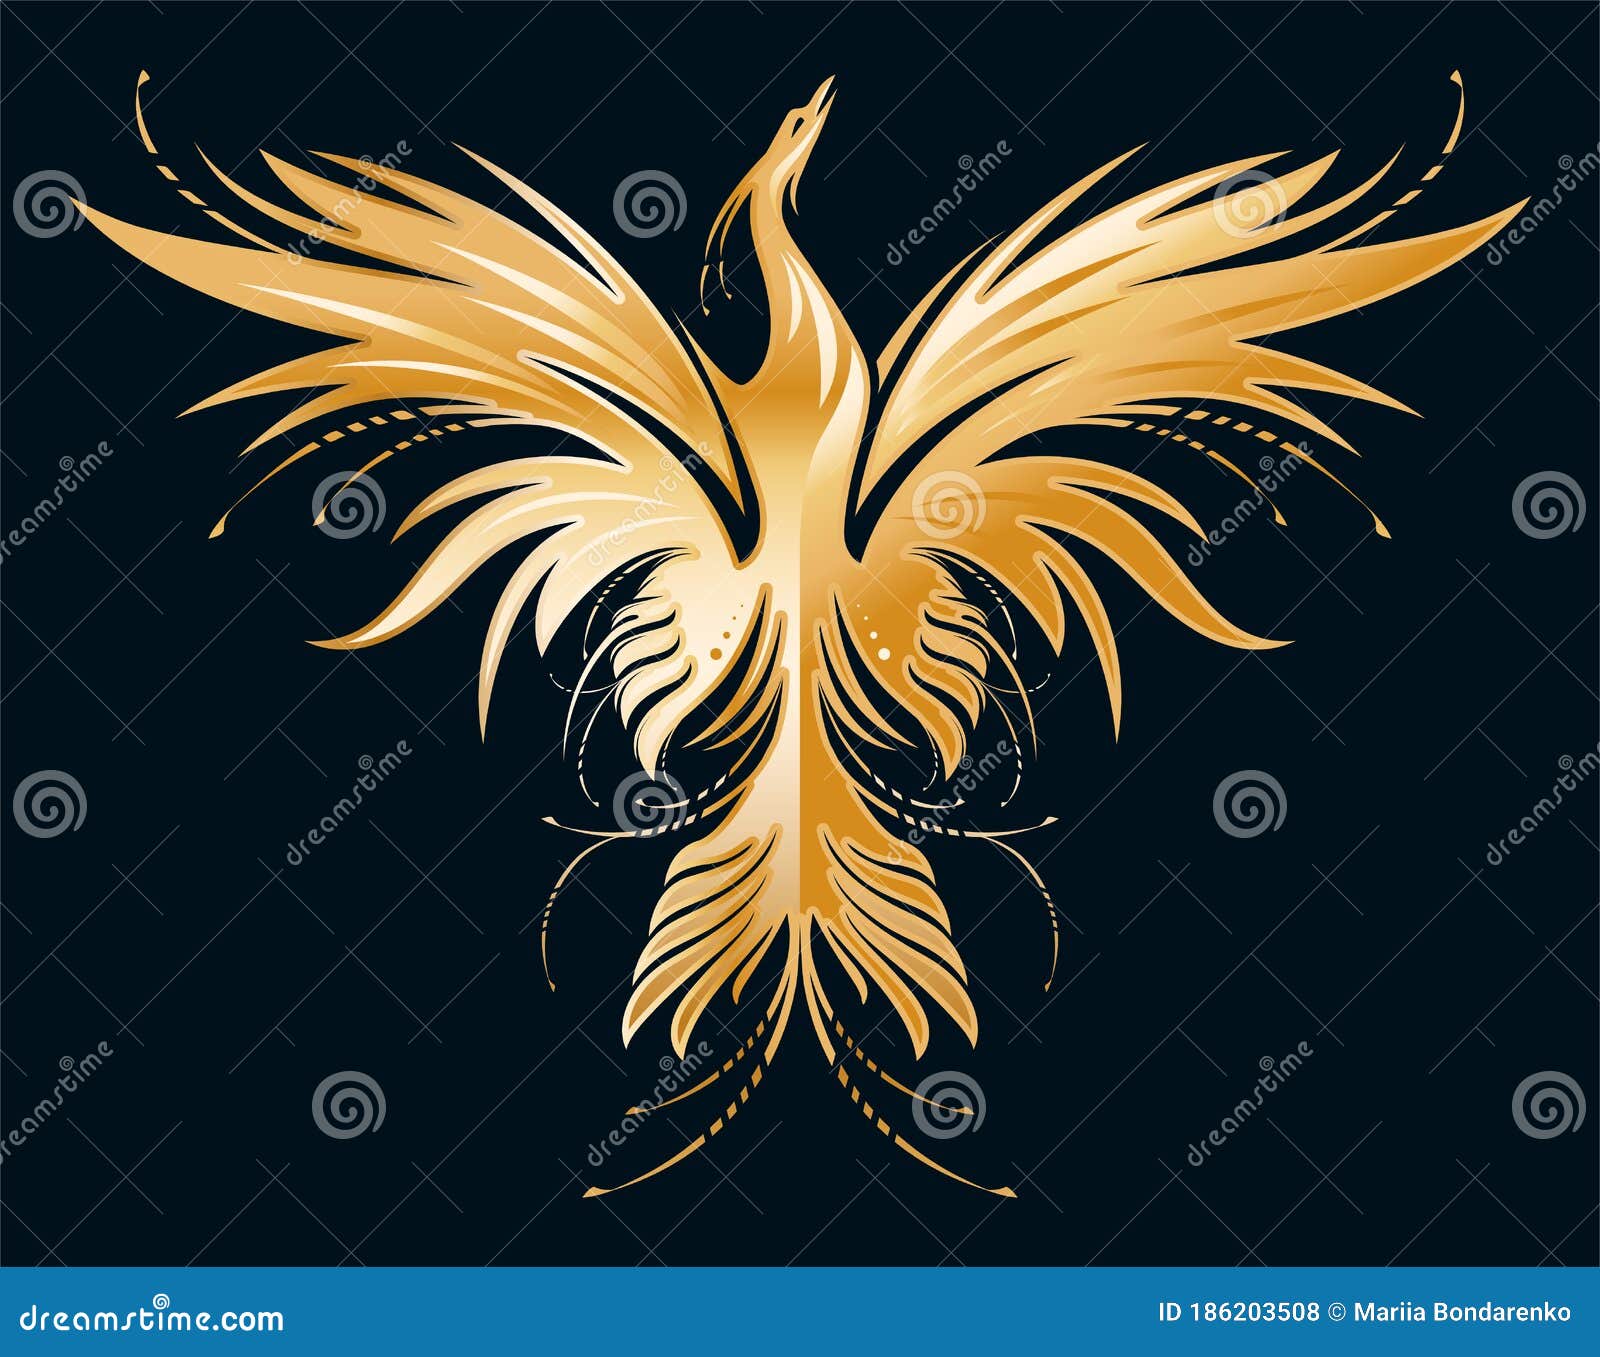 Stylized Image Of Golden Phoenix On Black Background Stock Vector Illustration Of Flying Feather